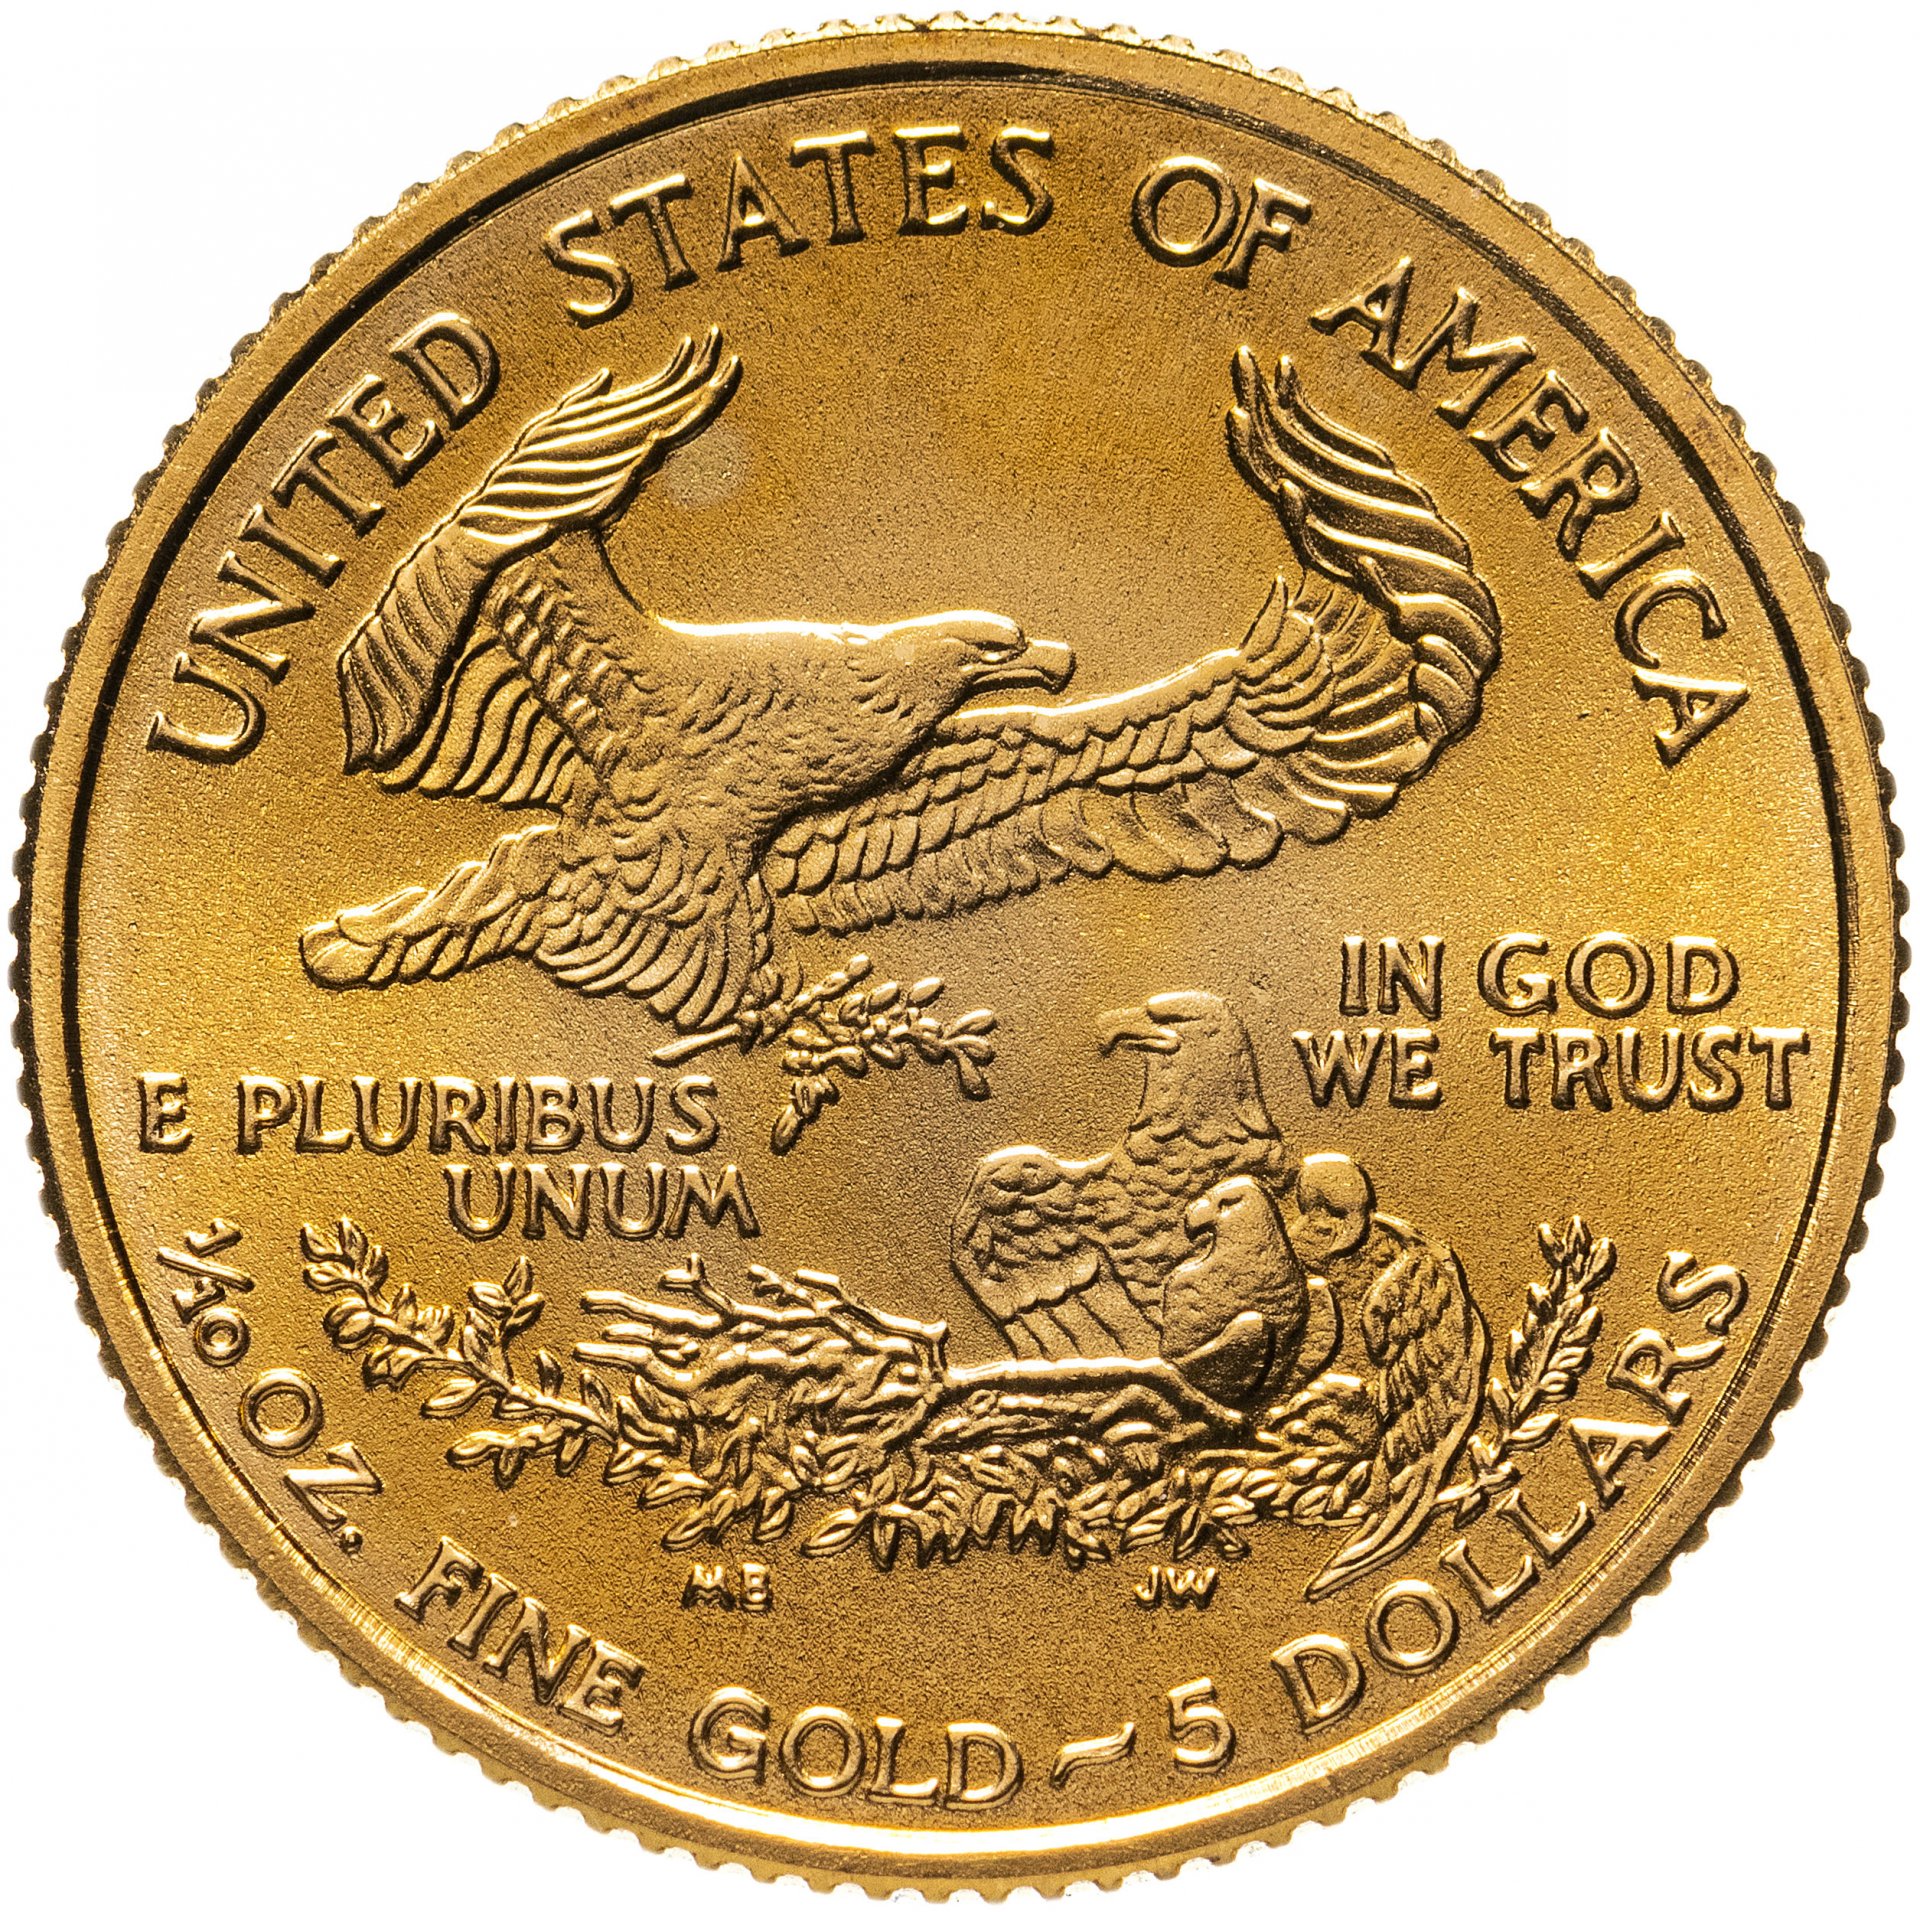 5 долларов золото. Американский Орел монета 5 доллар золото. Монета США 5 долларов золото. Золотая монета США Либерти 2006. Американский Орел монета.